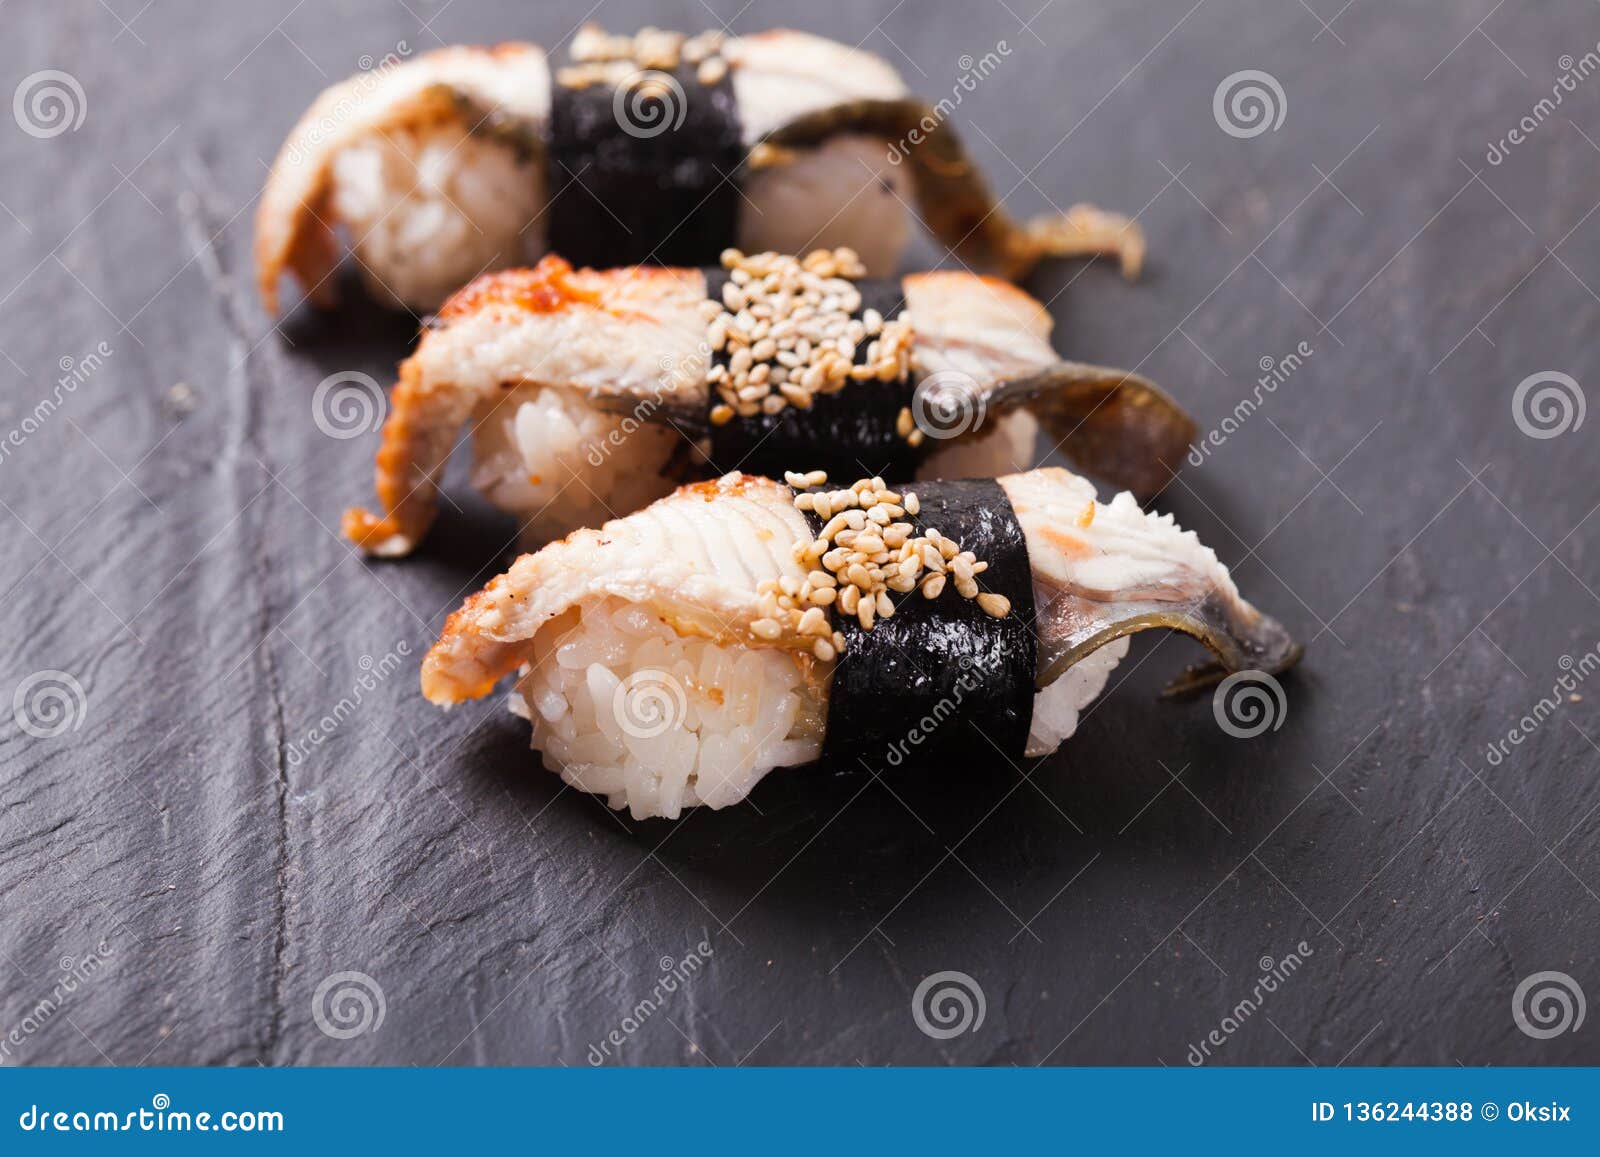 unagi nigiri sushi set on the black slate